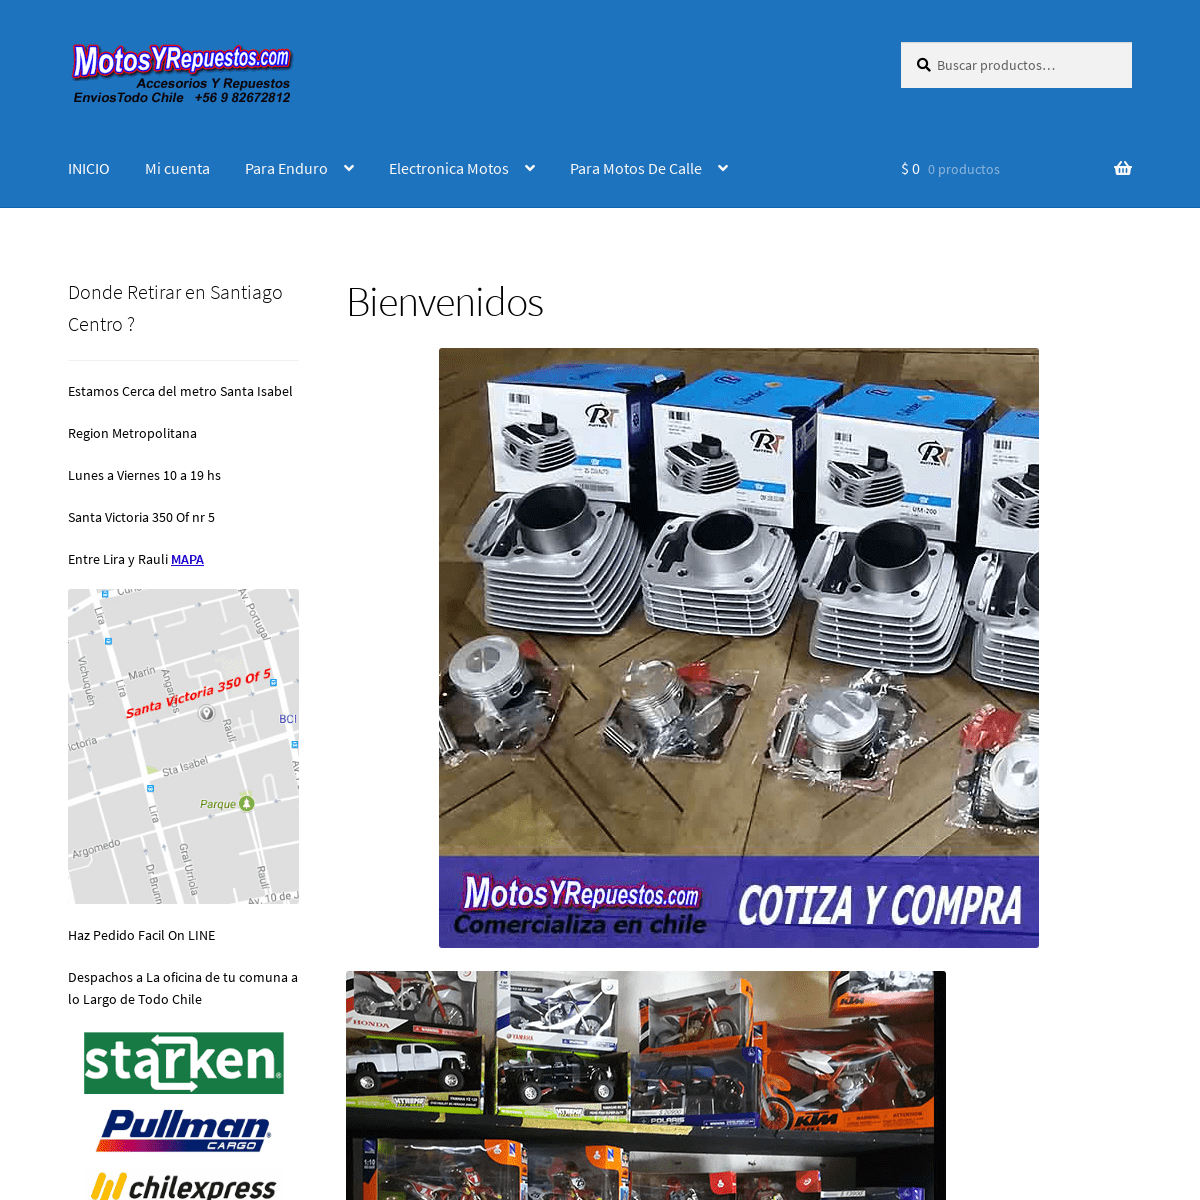 A complete backup of motosyrepuestos.com